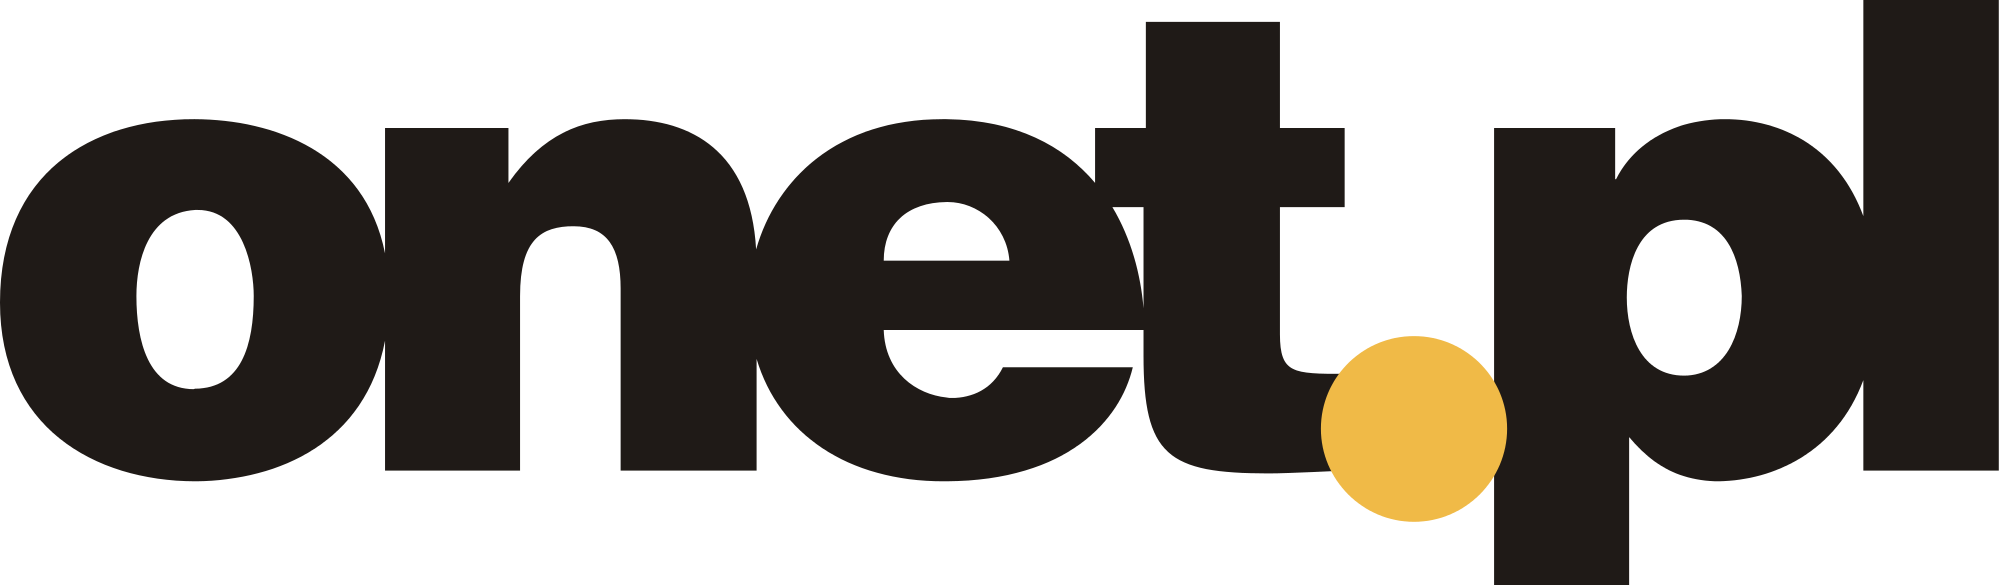 Onet.pl Logo